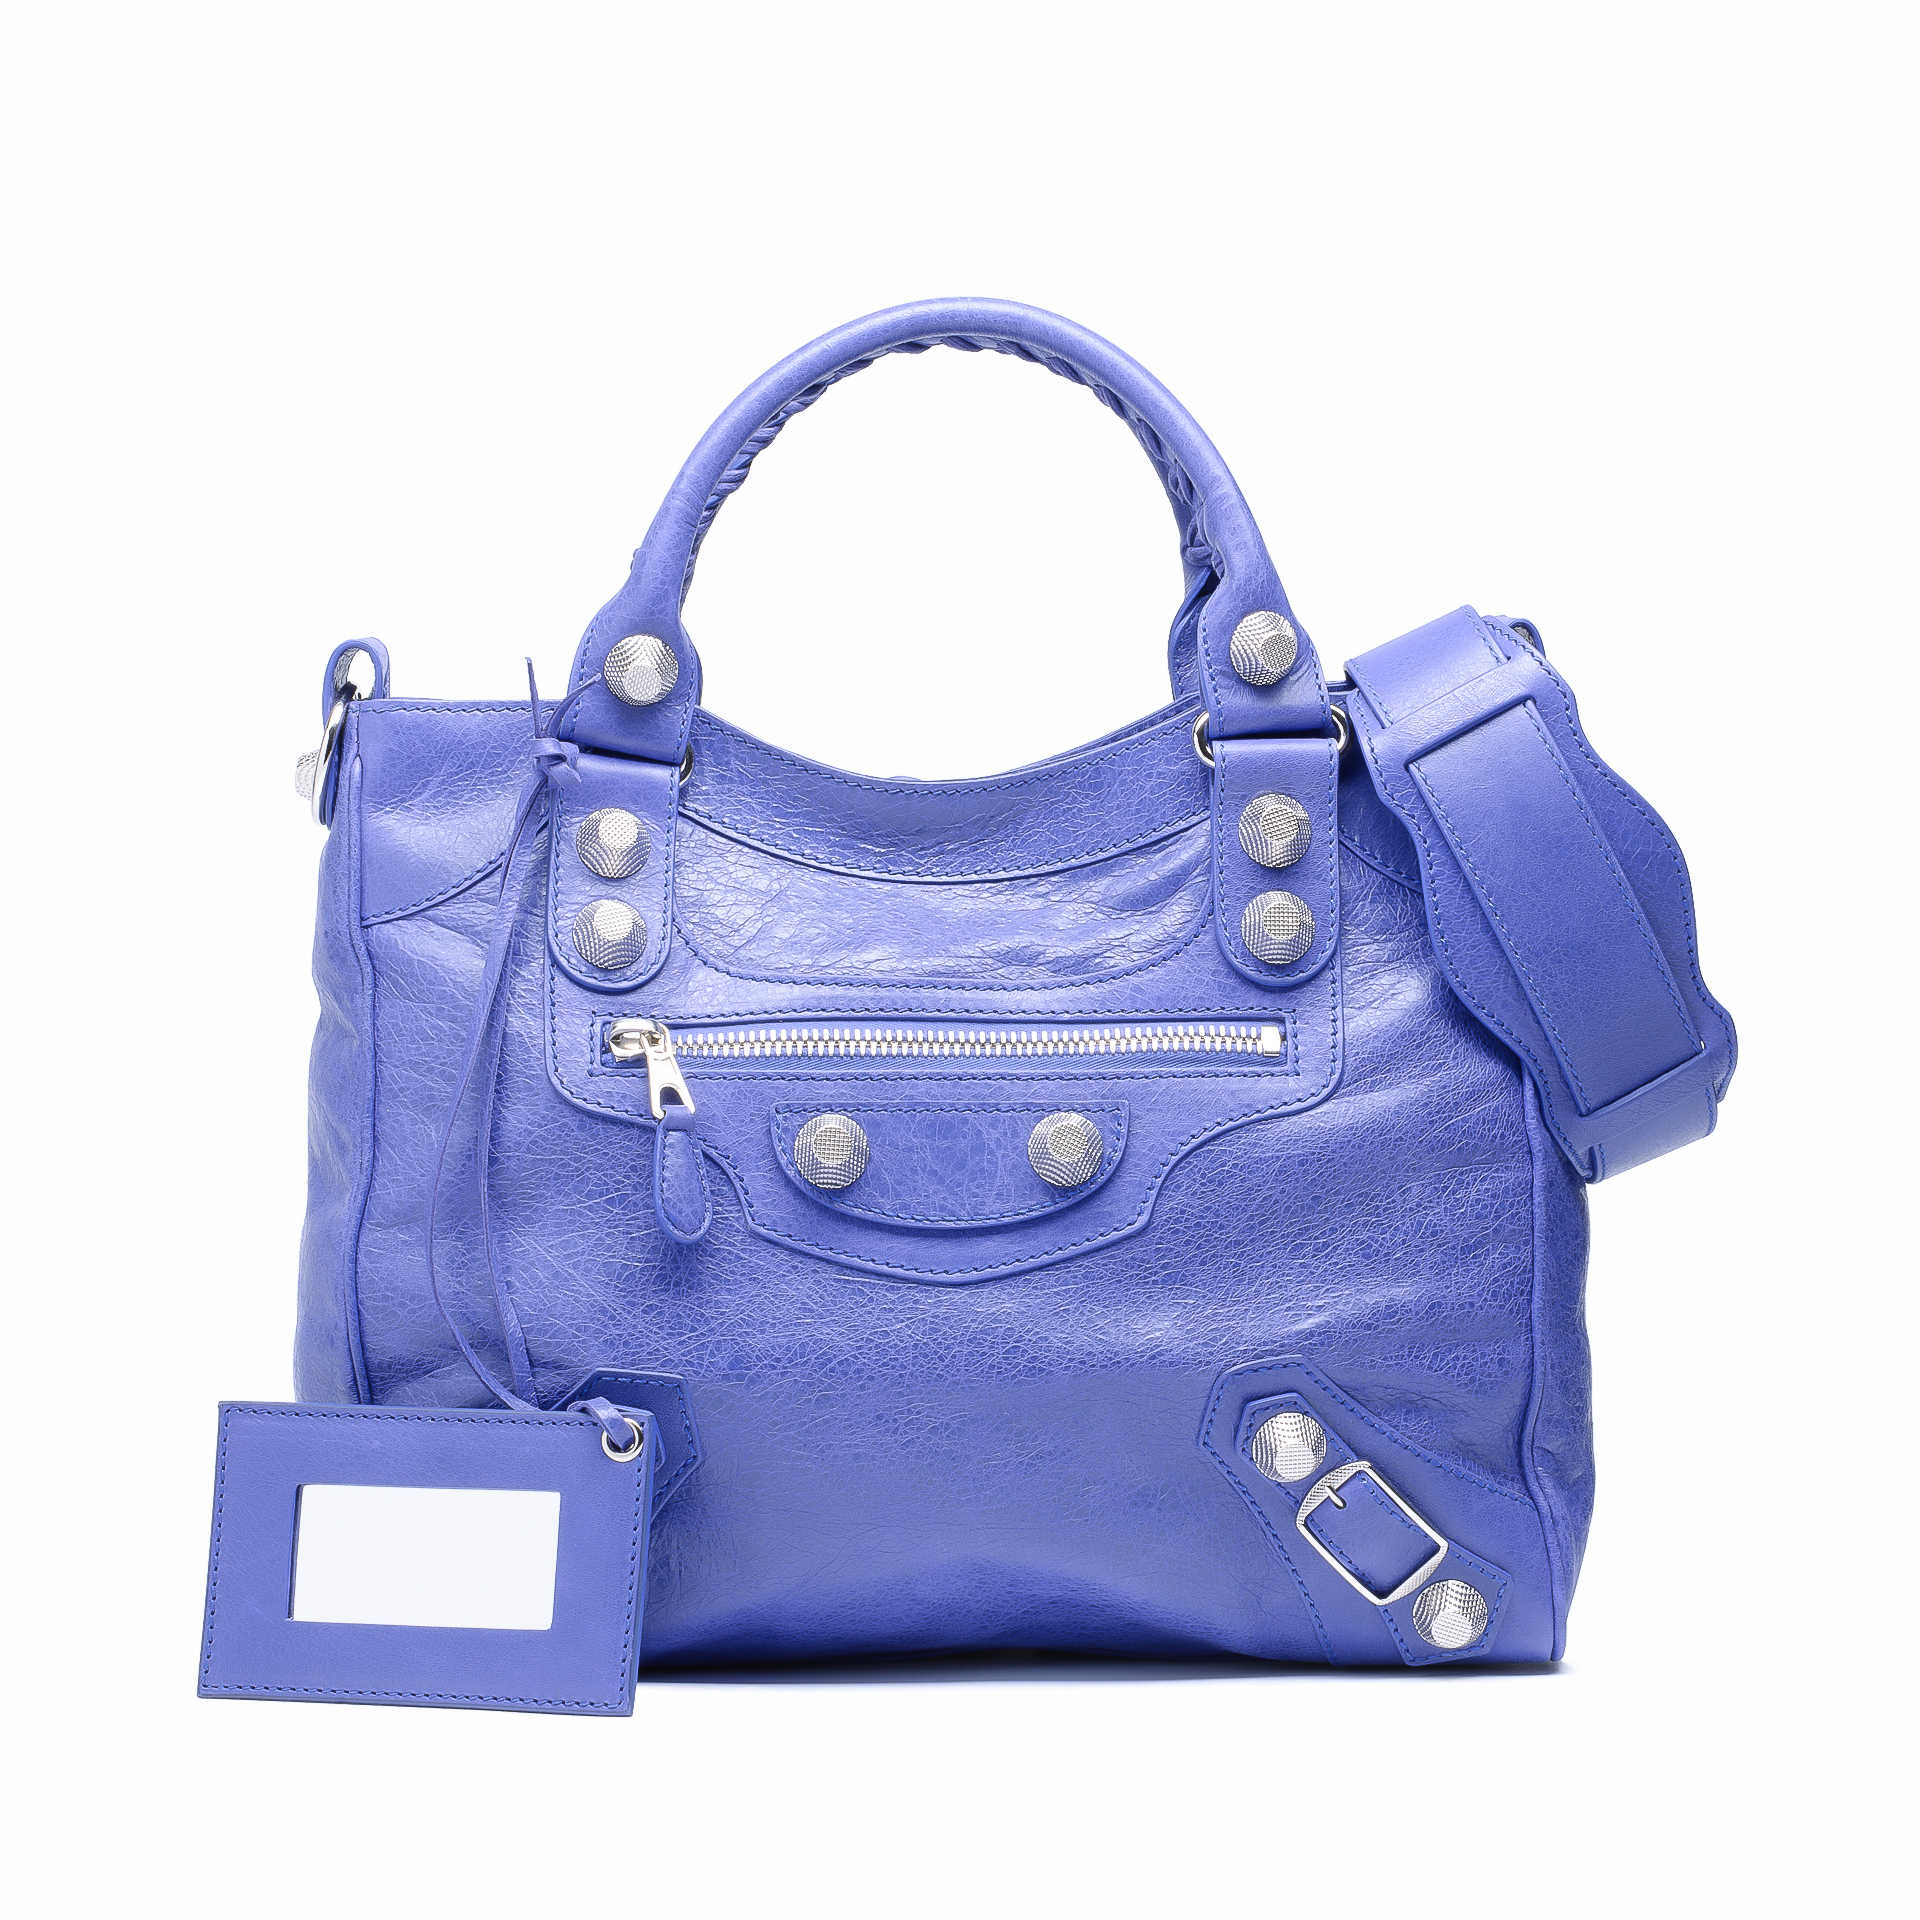 New Bag Gallery: Balenciaga Velo Bag - Spotted Fashion